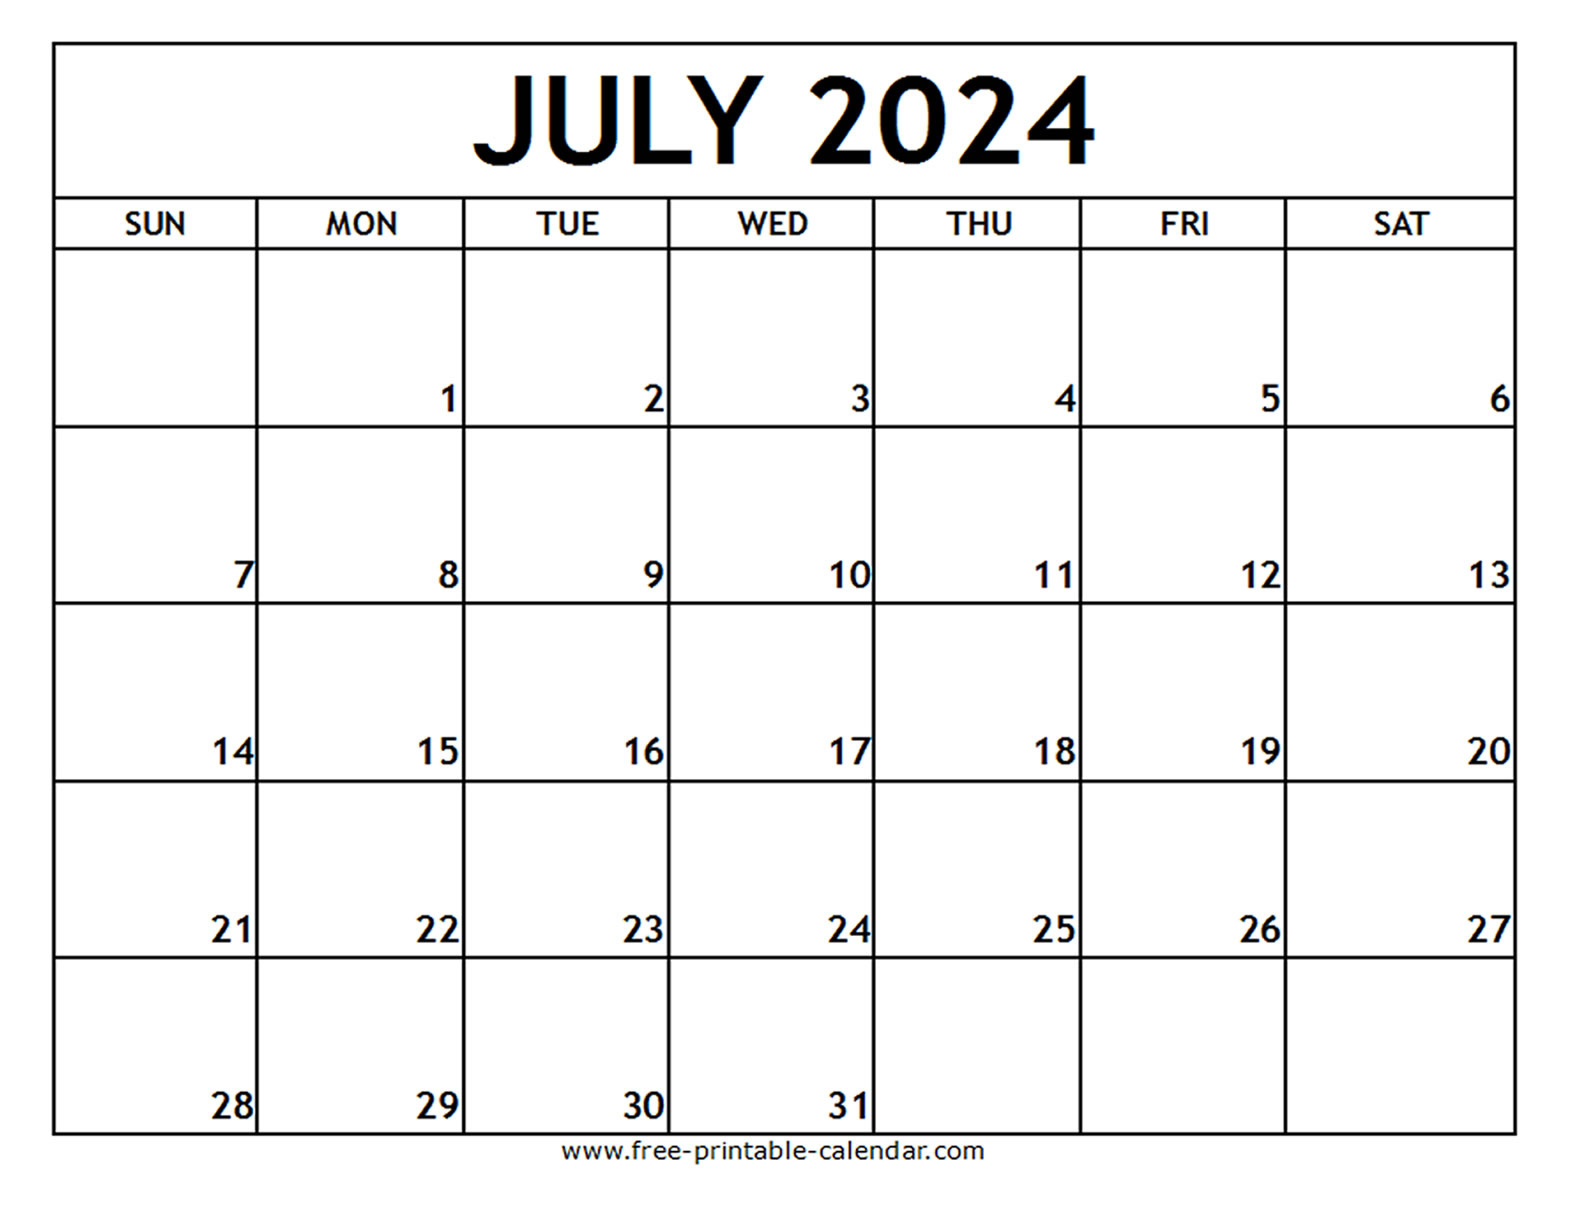 July 2024 Printable Calendar - Free-Printable-Calendar in July 2024 Calendar Free Printable